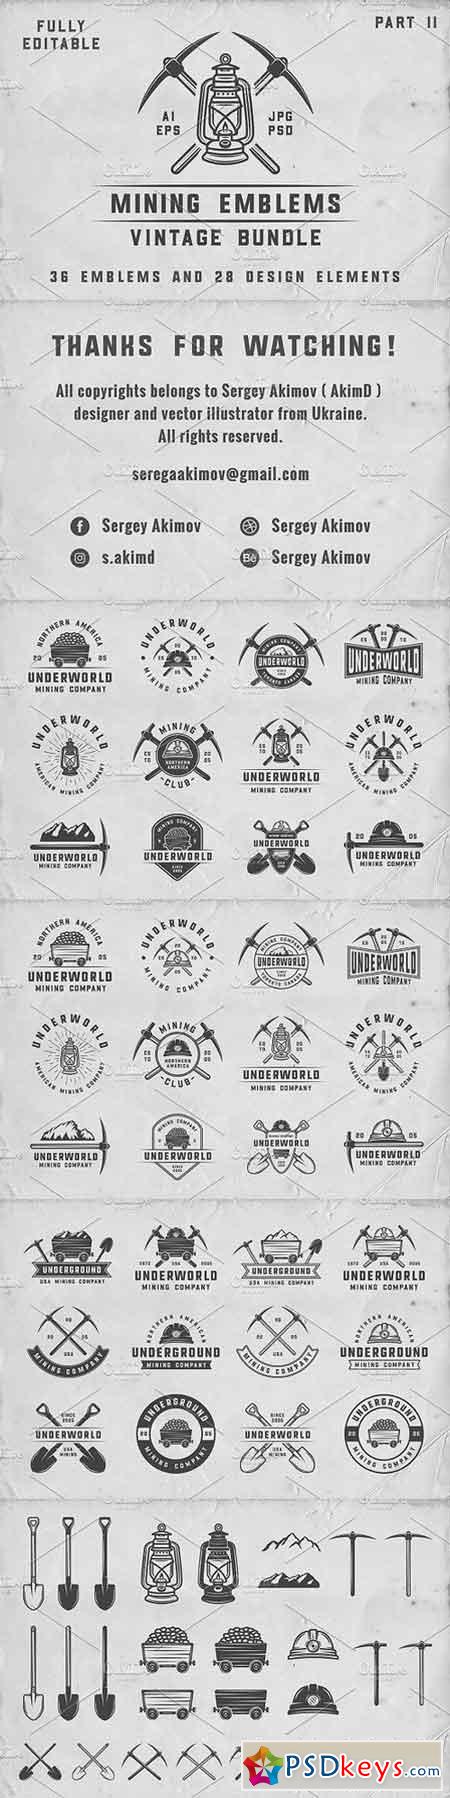 36 Vintage Mining Emblems part 2 1356775